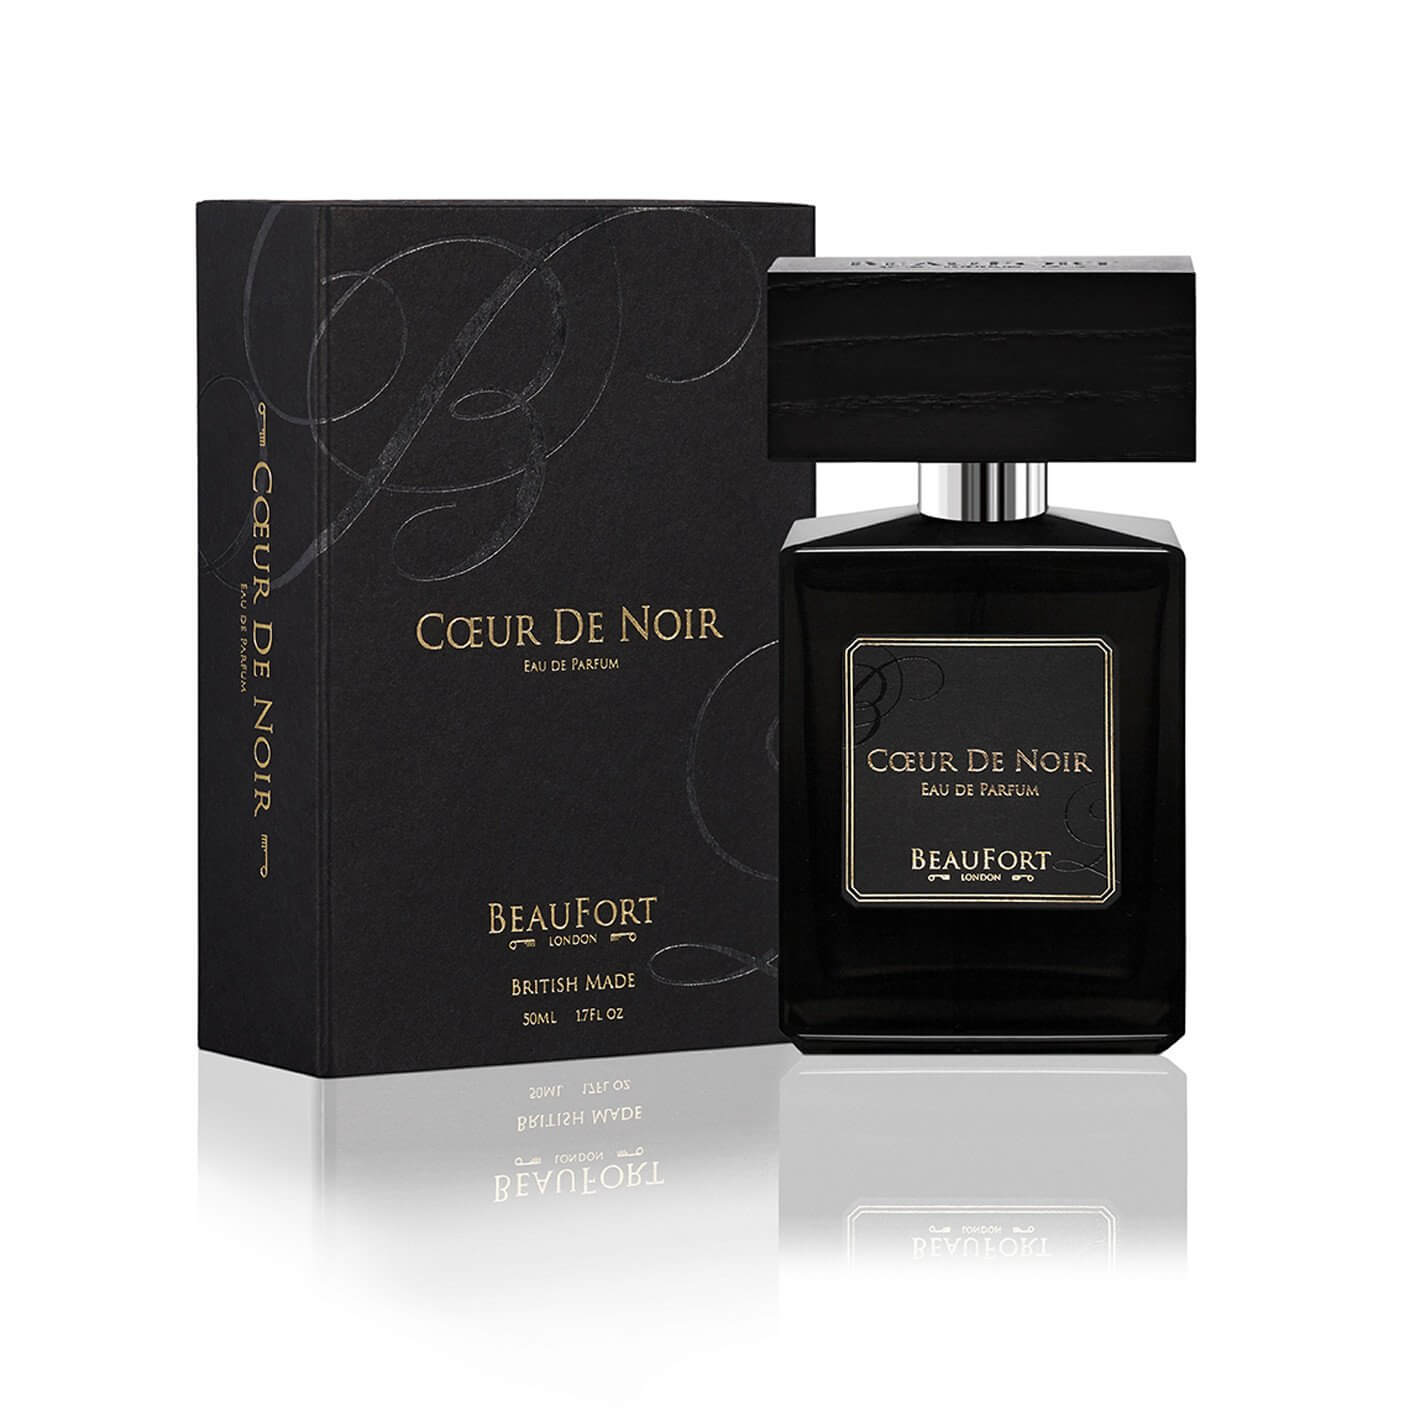 Coeur de Noir by Beaufort at Indigo Perfumery